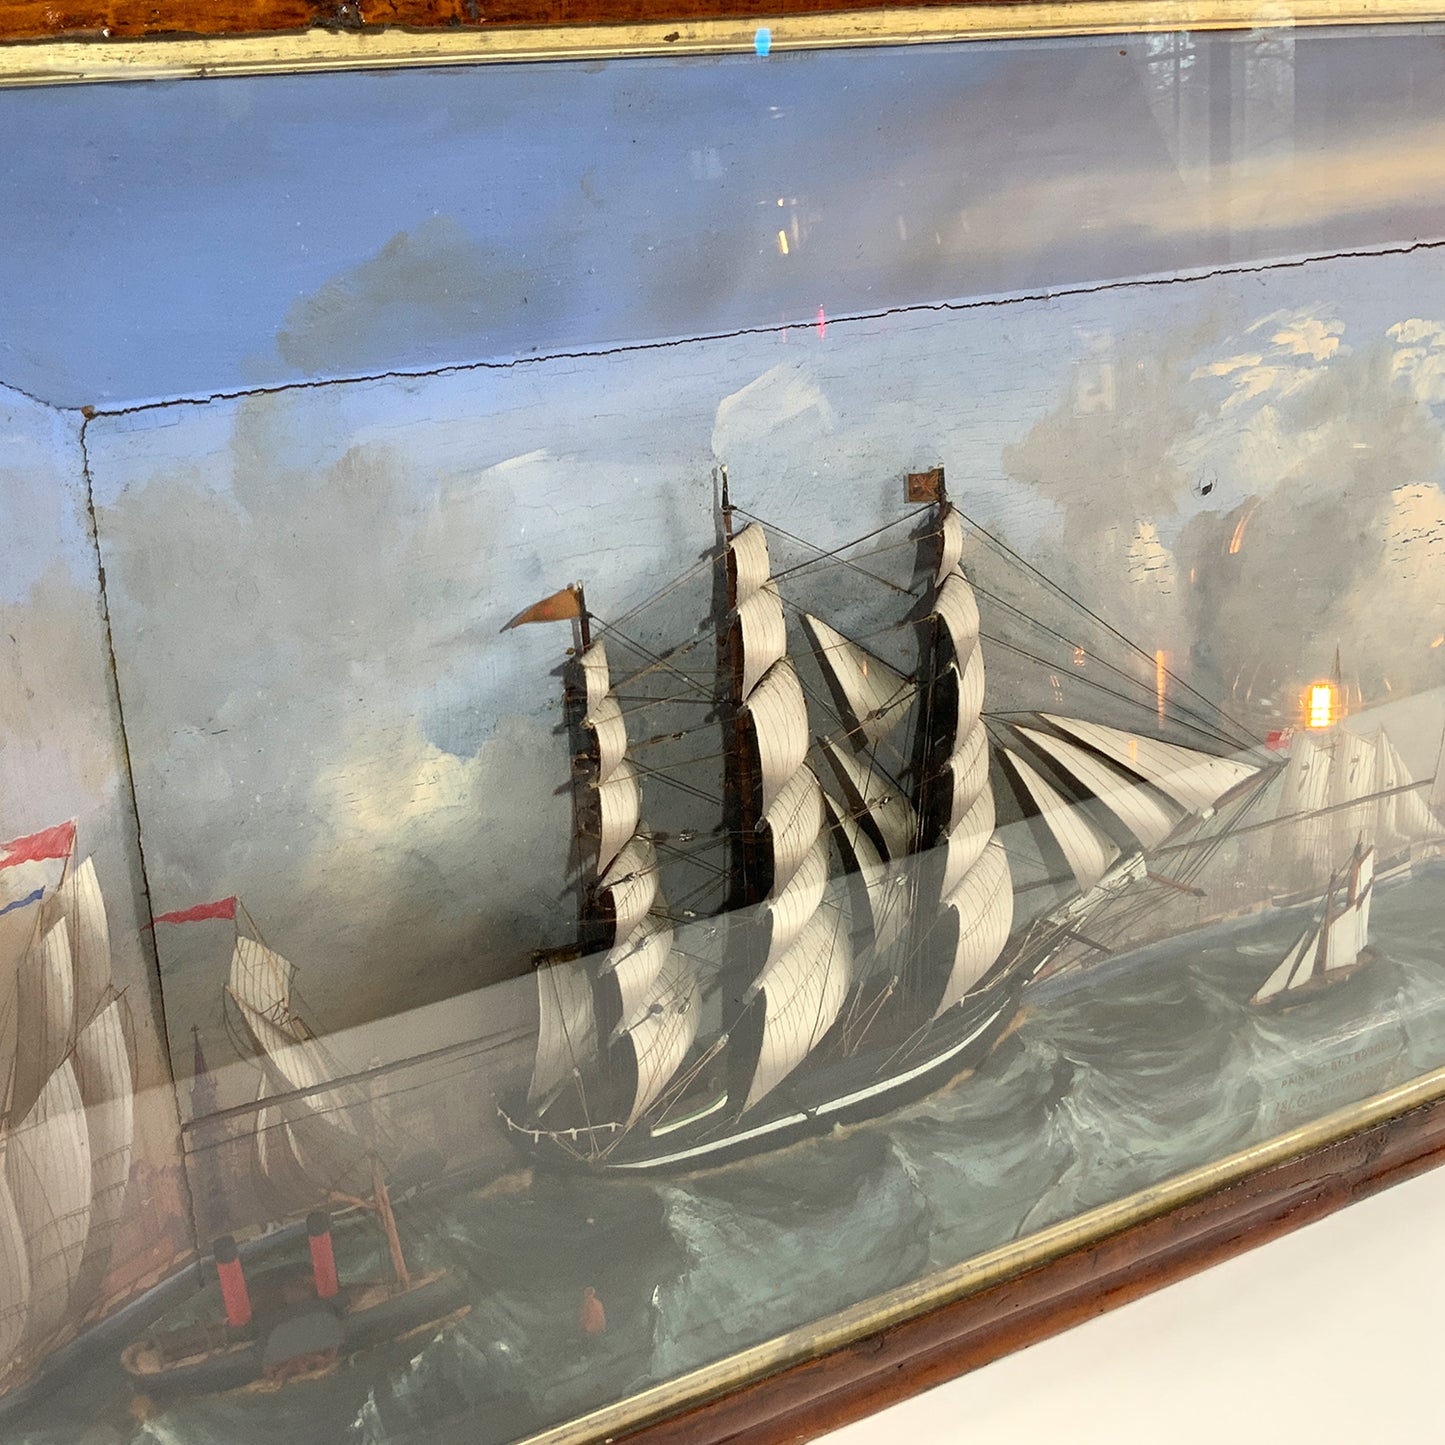 Rare And Important English Shadow Box Model Of A Full-Rigged Ship - Lannan Gallery